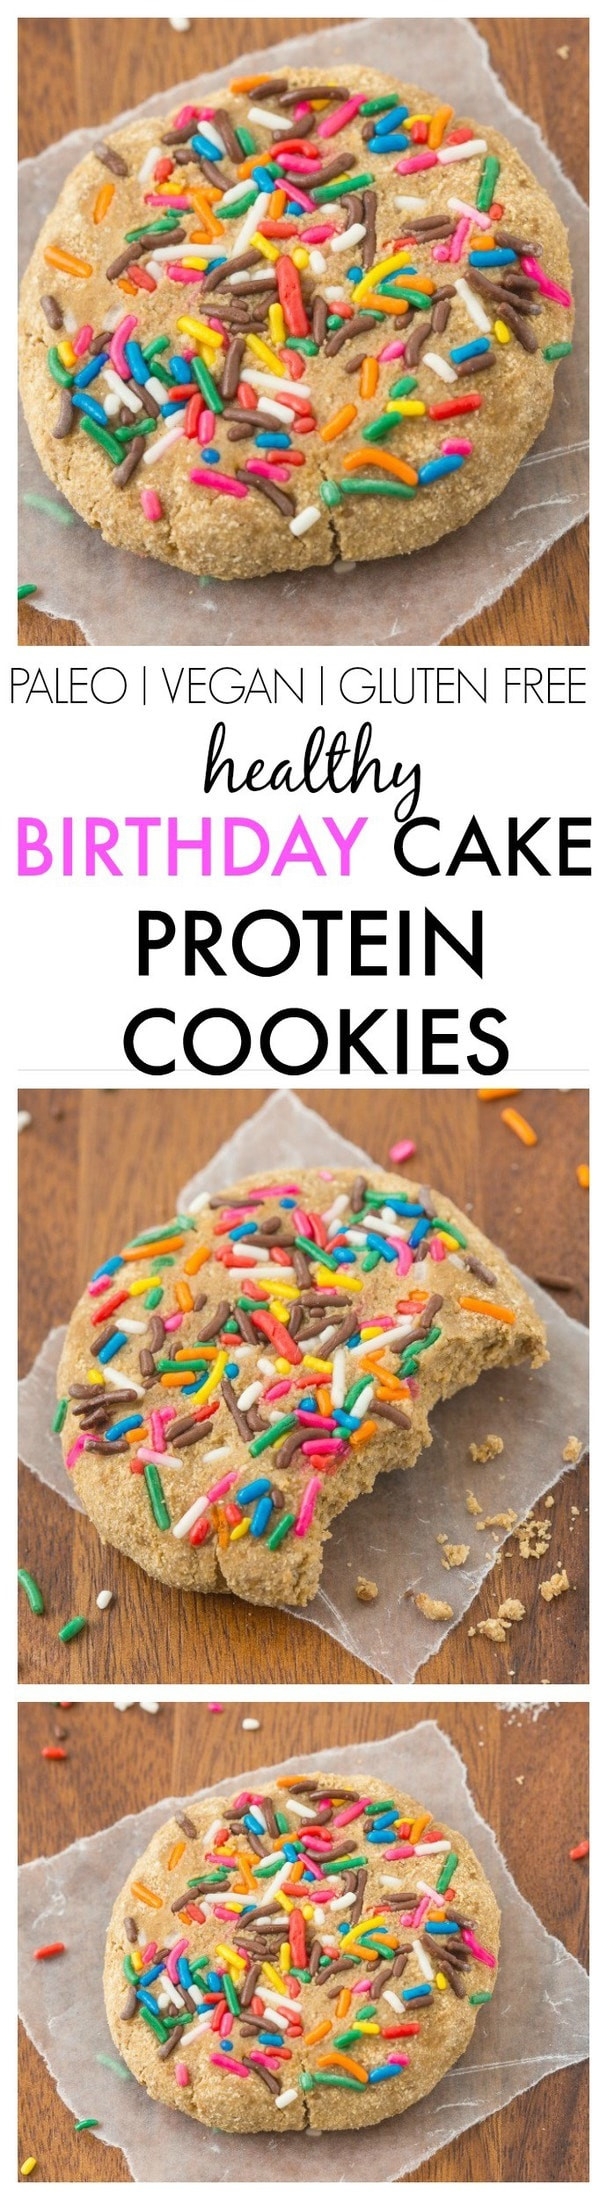 Protein Birthday Cake
 Healthy Birthday Cake Protein Cookies